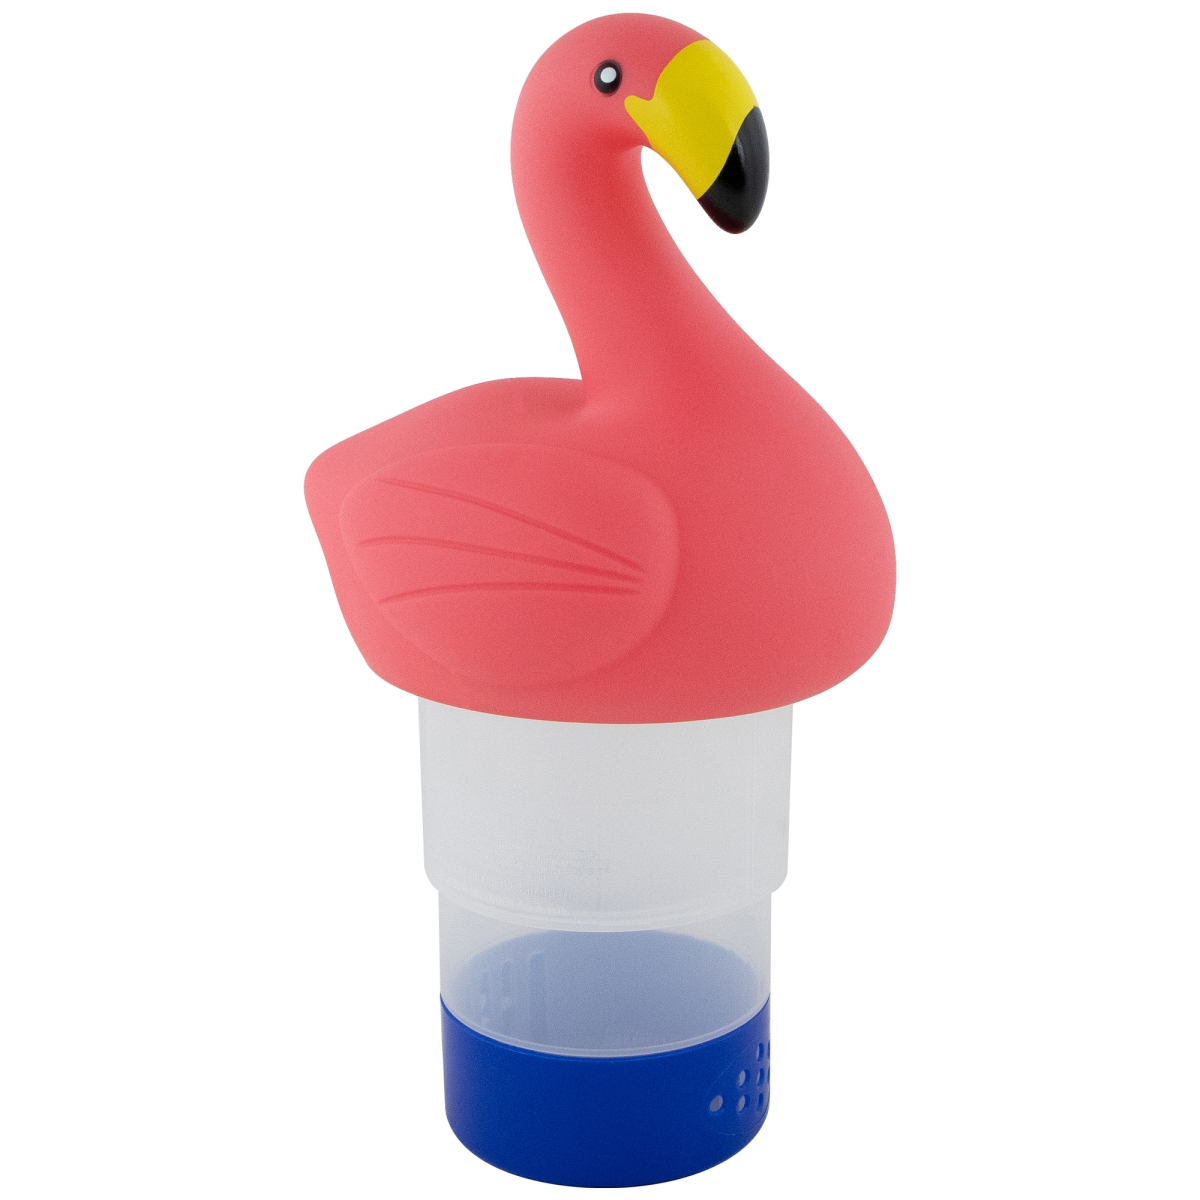 Swimline 35175245 12 in. Flamingo Floating Pool Chlorine Dispenser, Pink -  Swimline Corporation